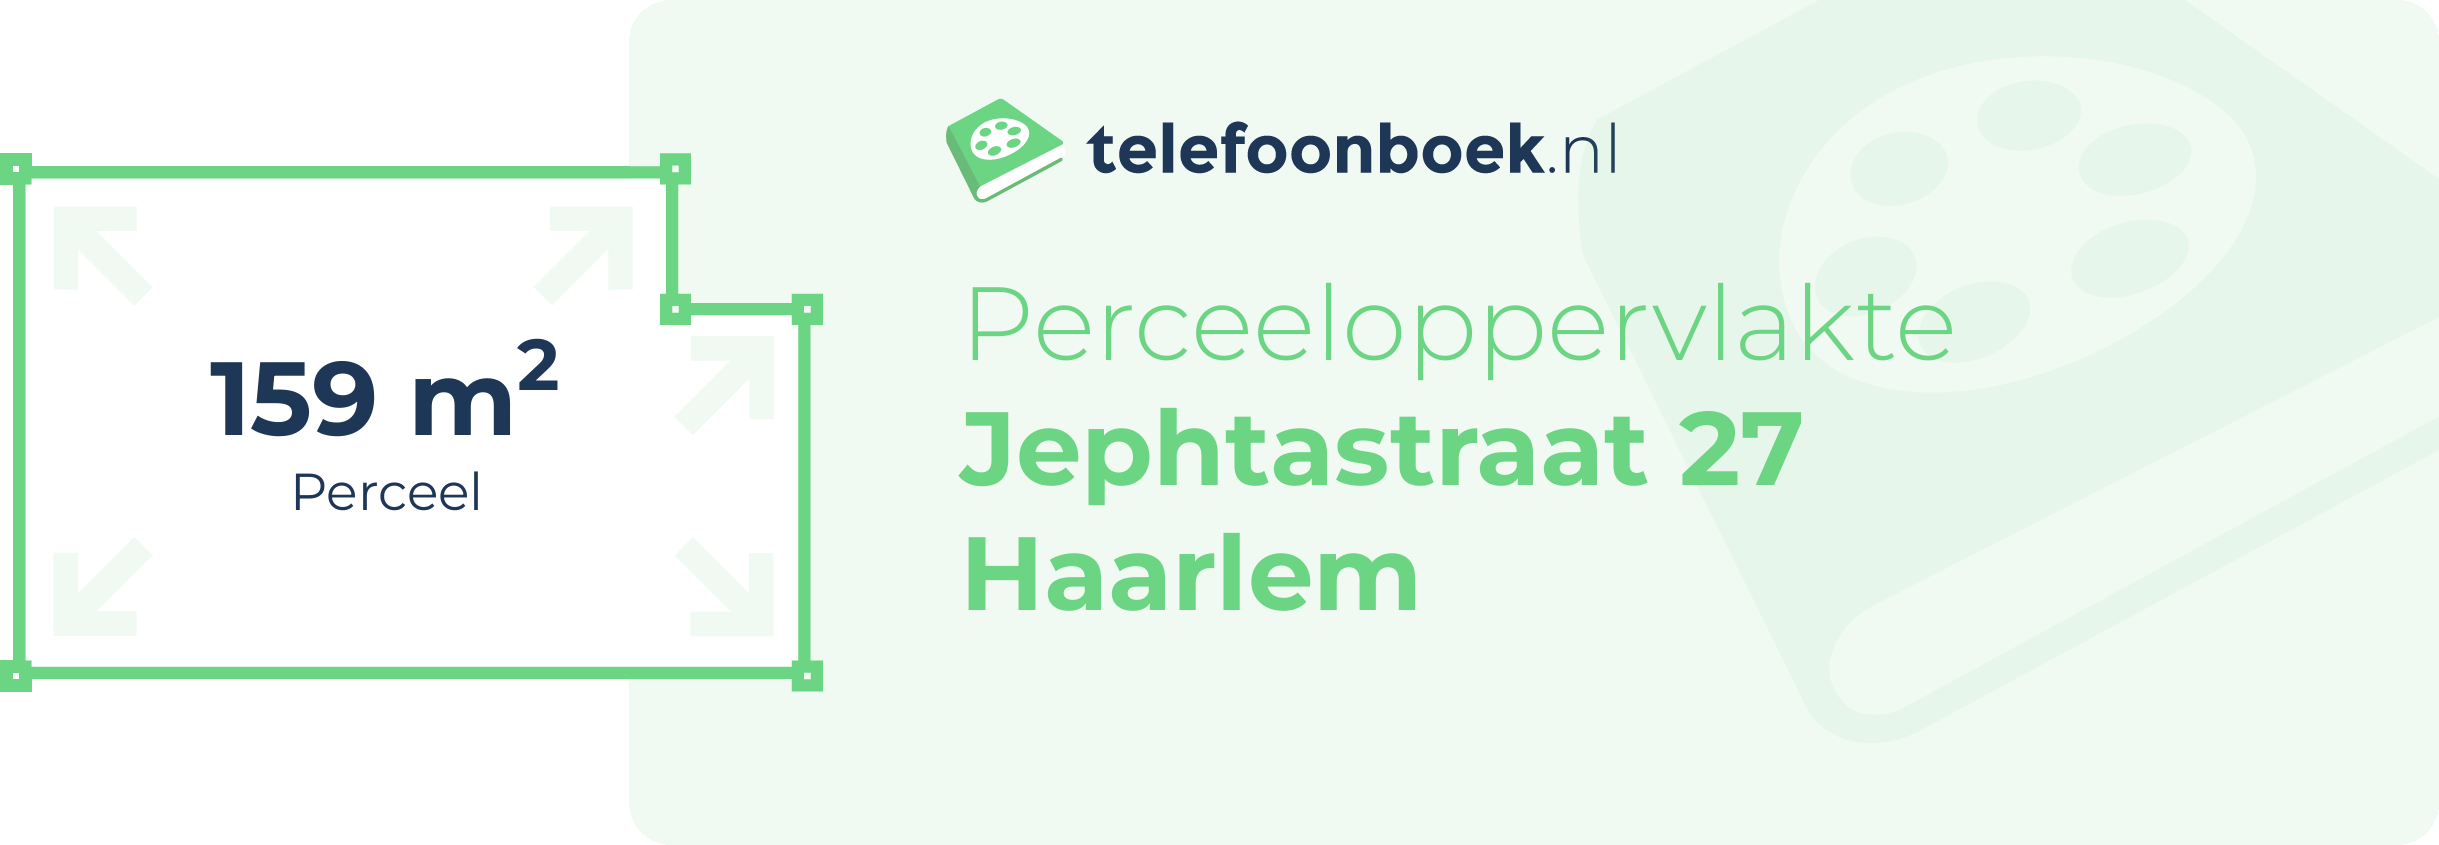 Perceeloppervlakte Jephtastraat 27 Haarlem